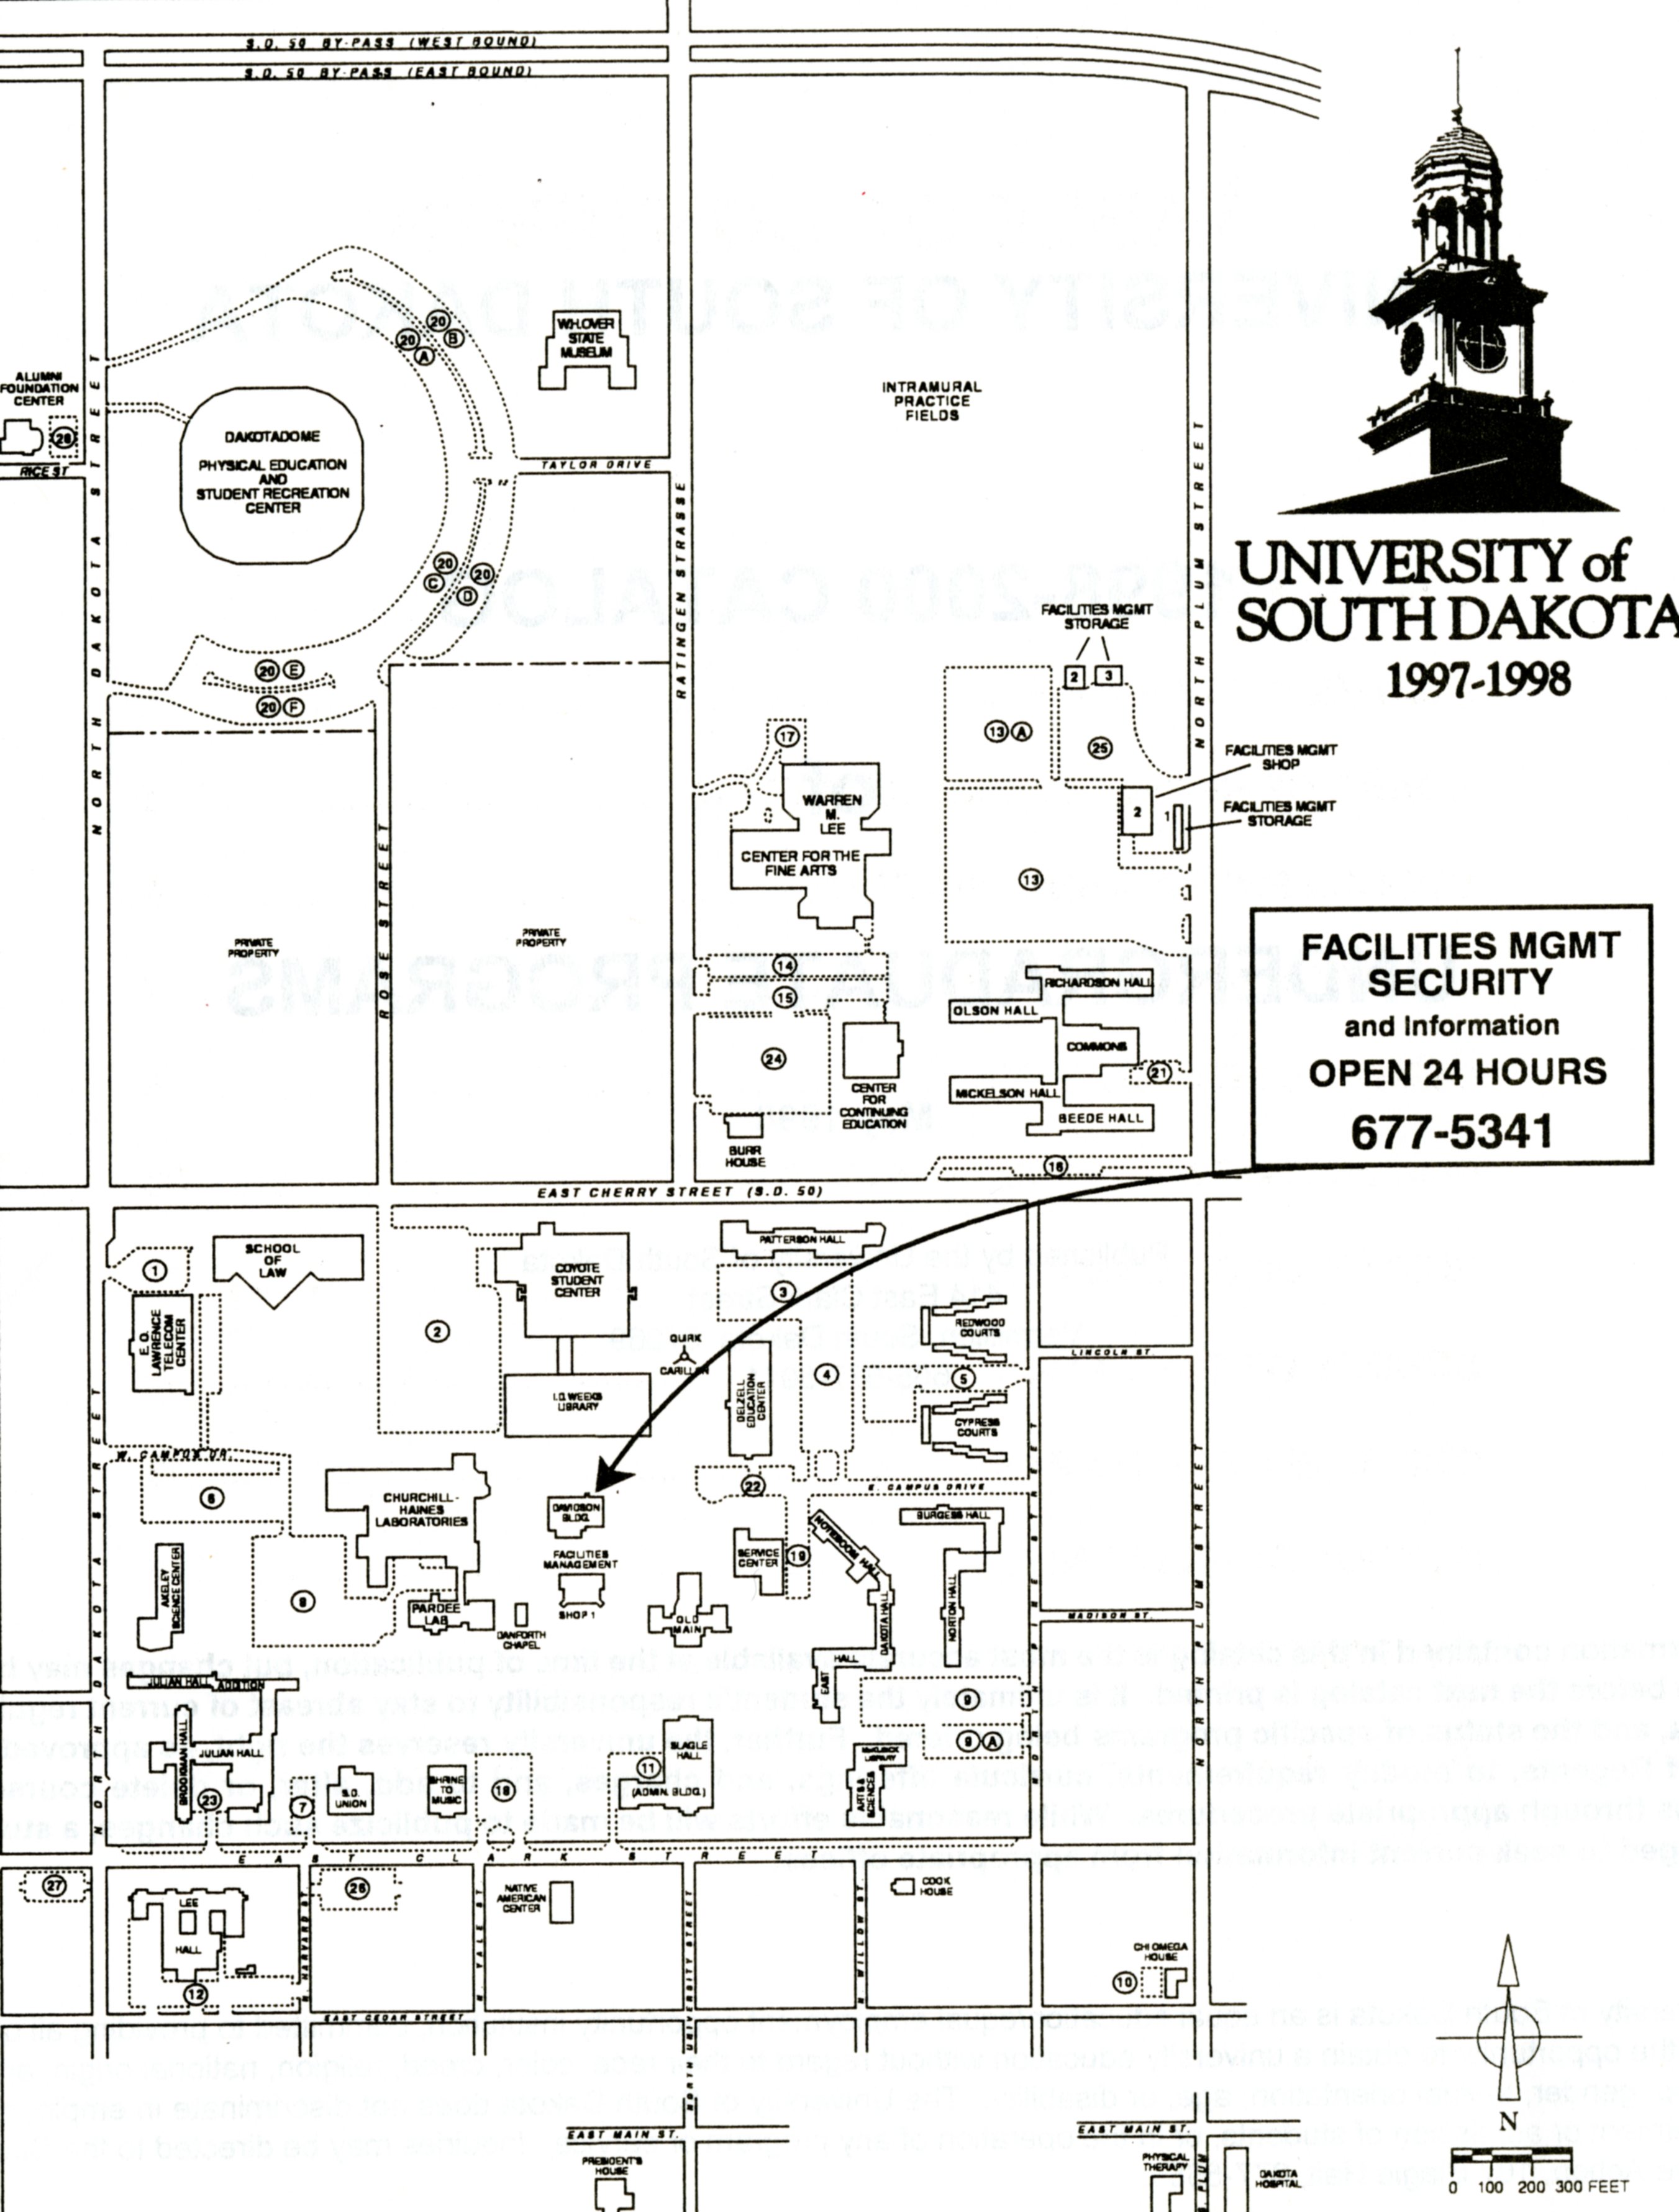 Campus Maps, Directions & Parking | University of South Dakota